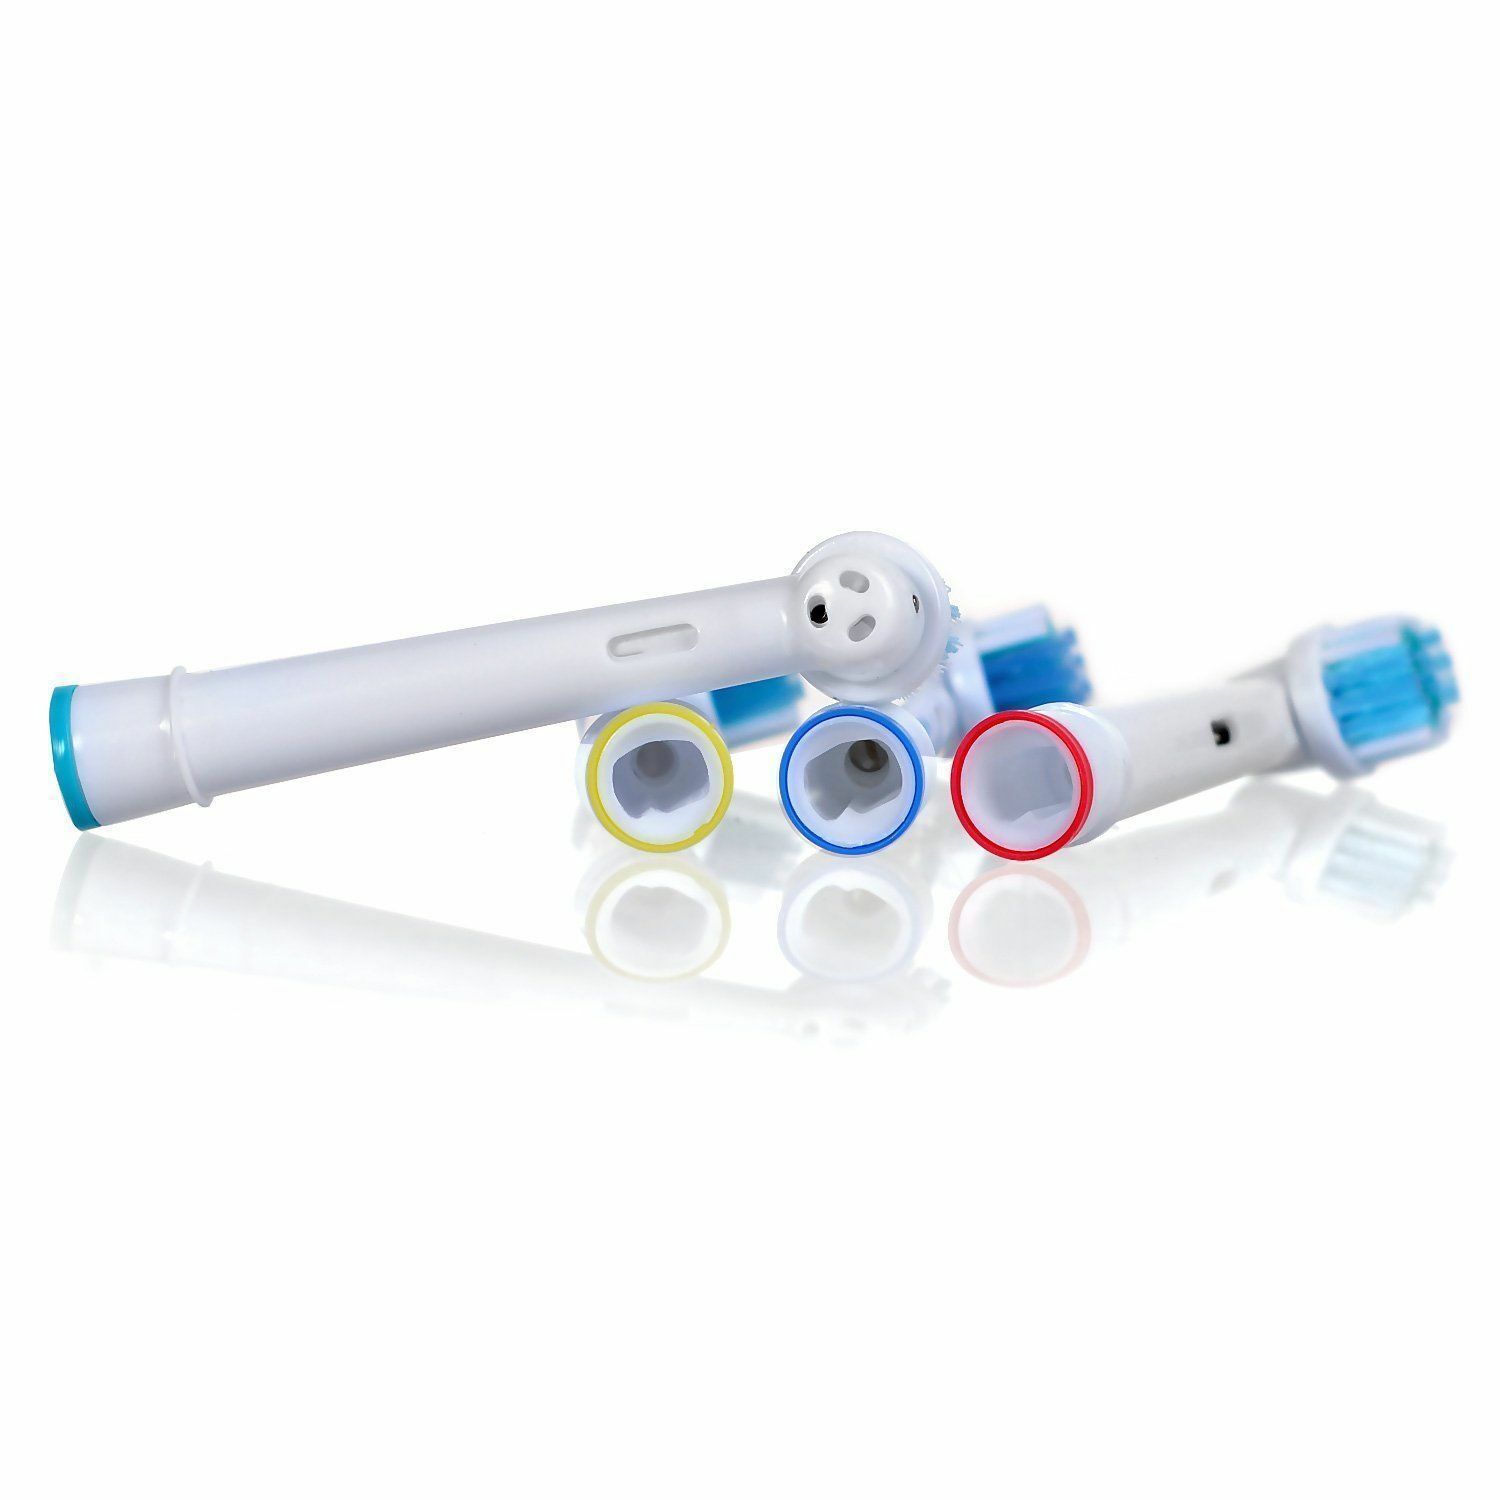 GENKENT Replacement Toothbrush Heads for Braun Oral-b (8 Pcs) - image 5 of 6